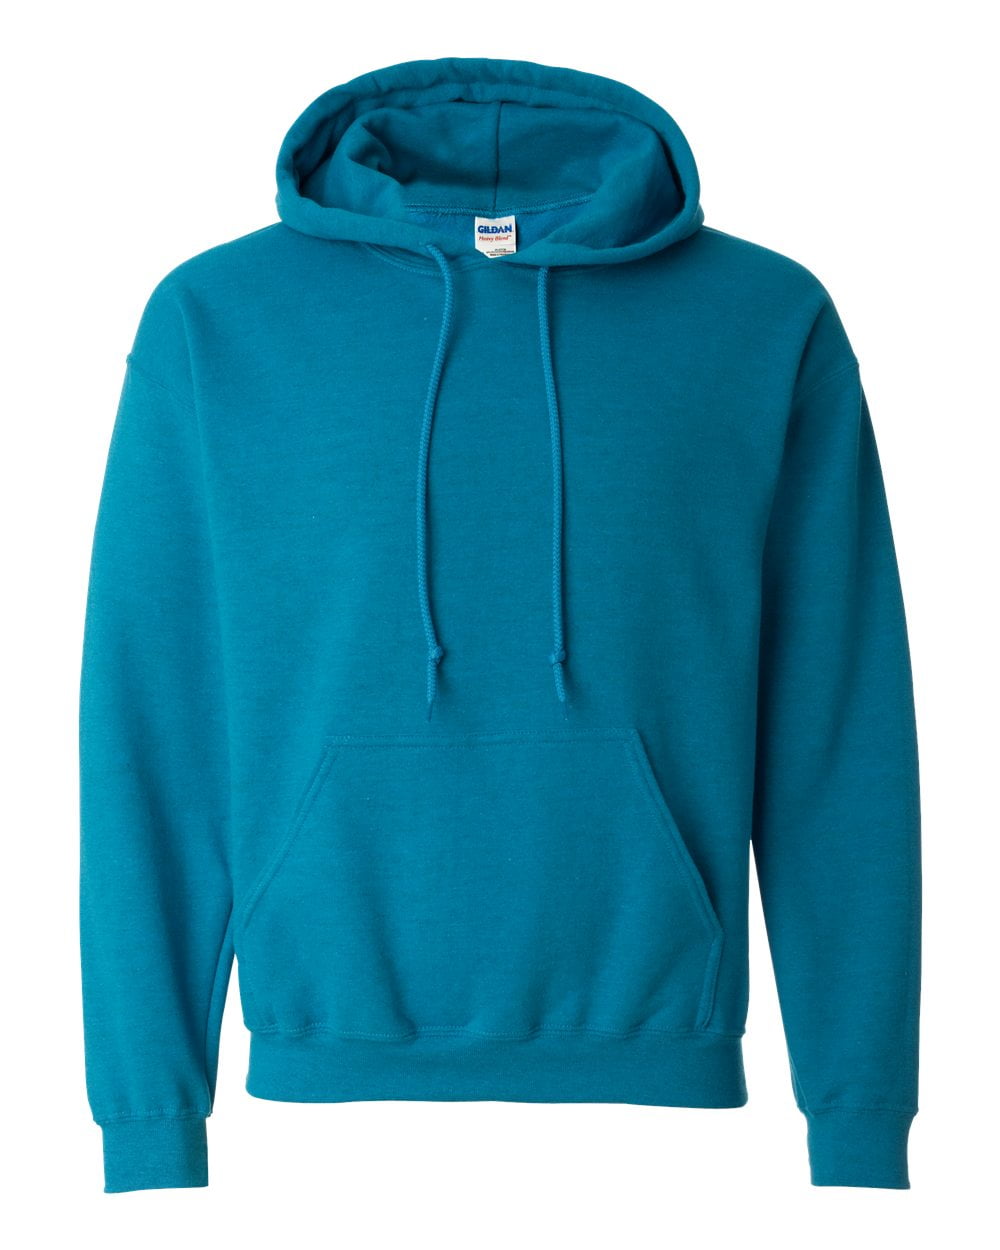 Size 5x hoodies